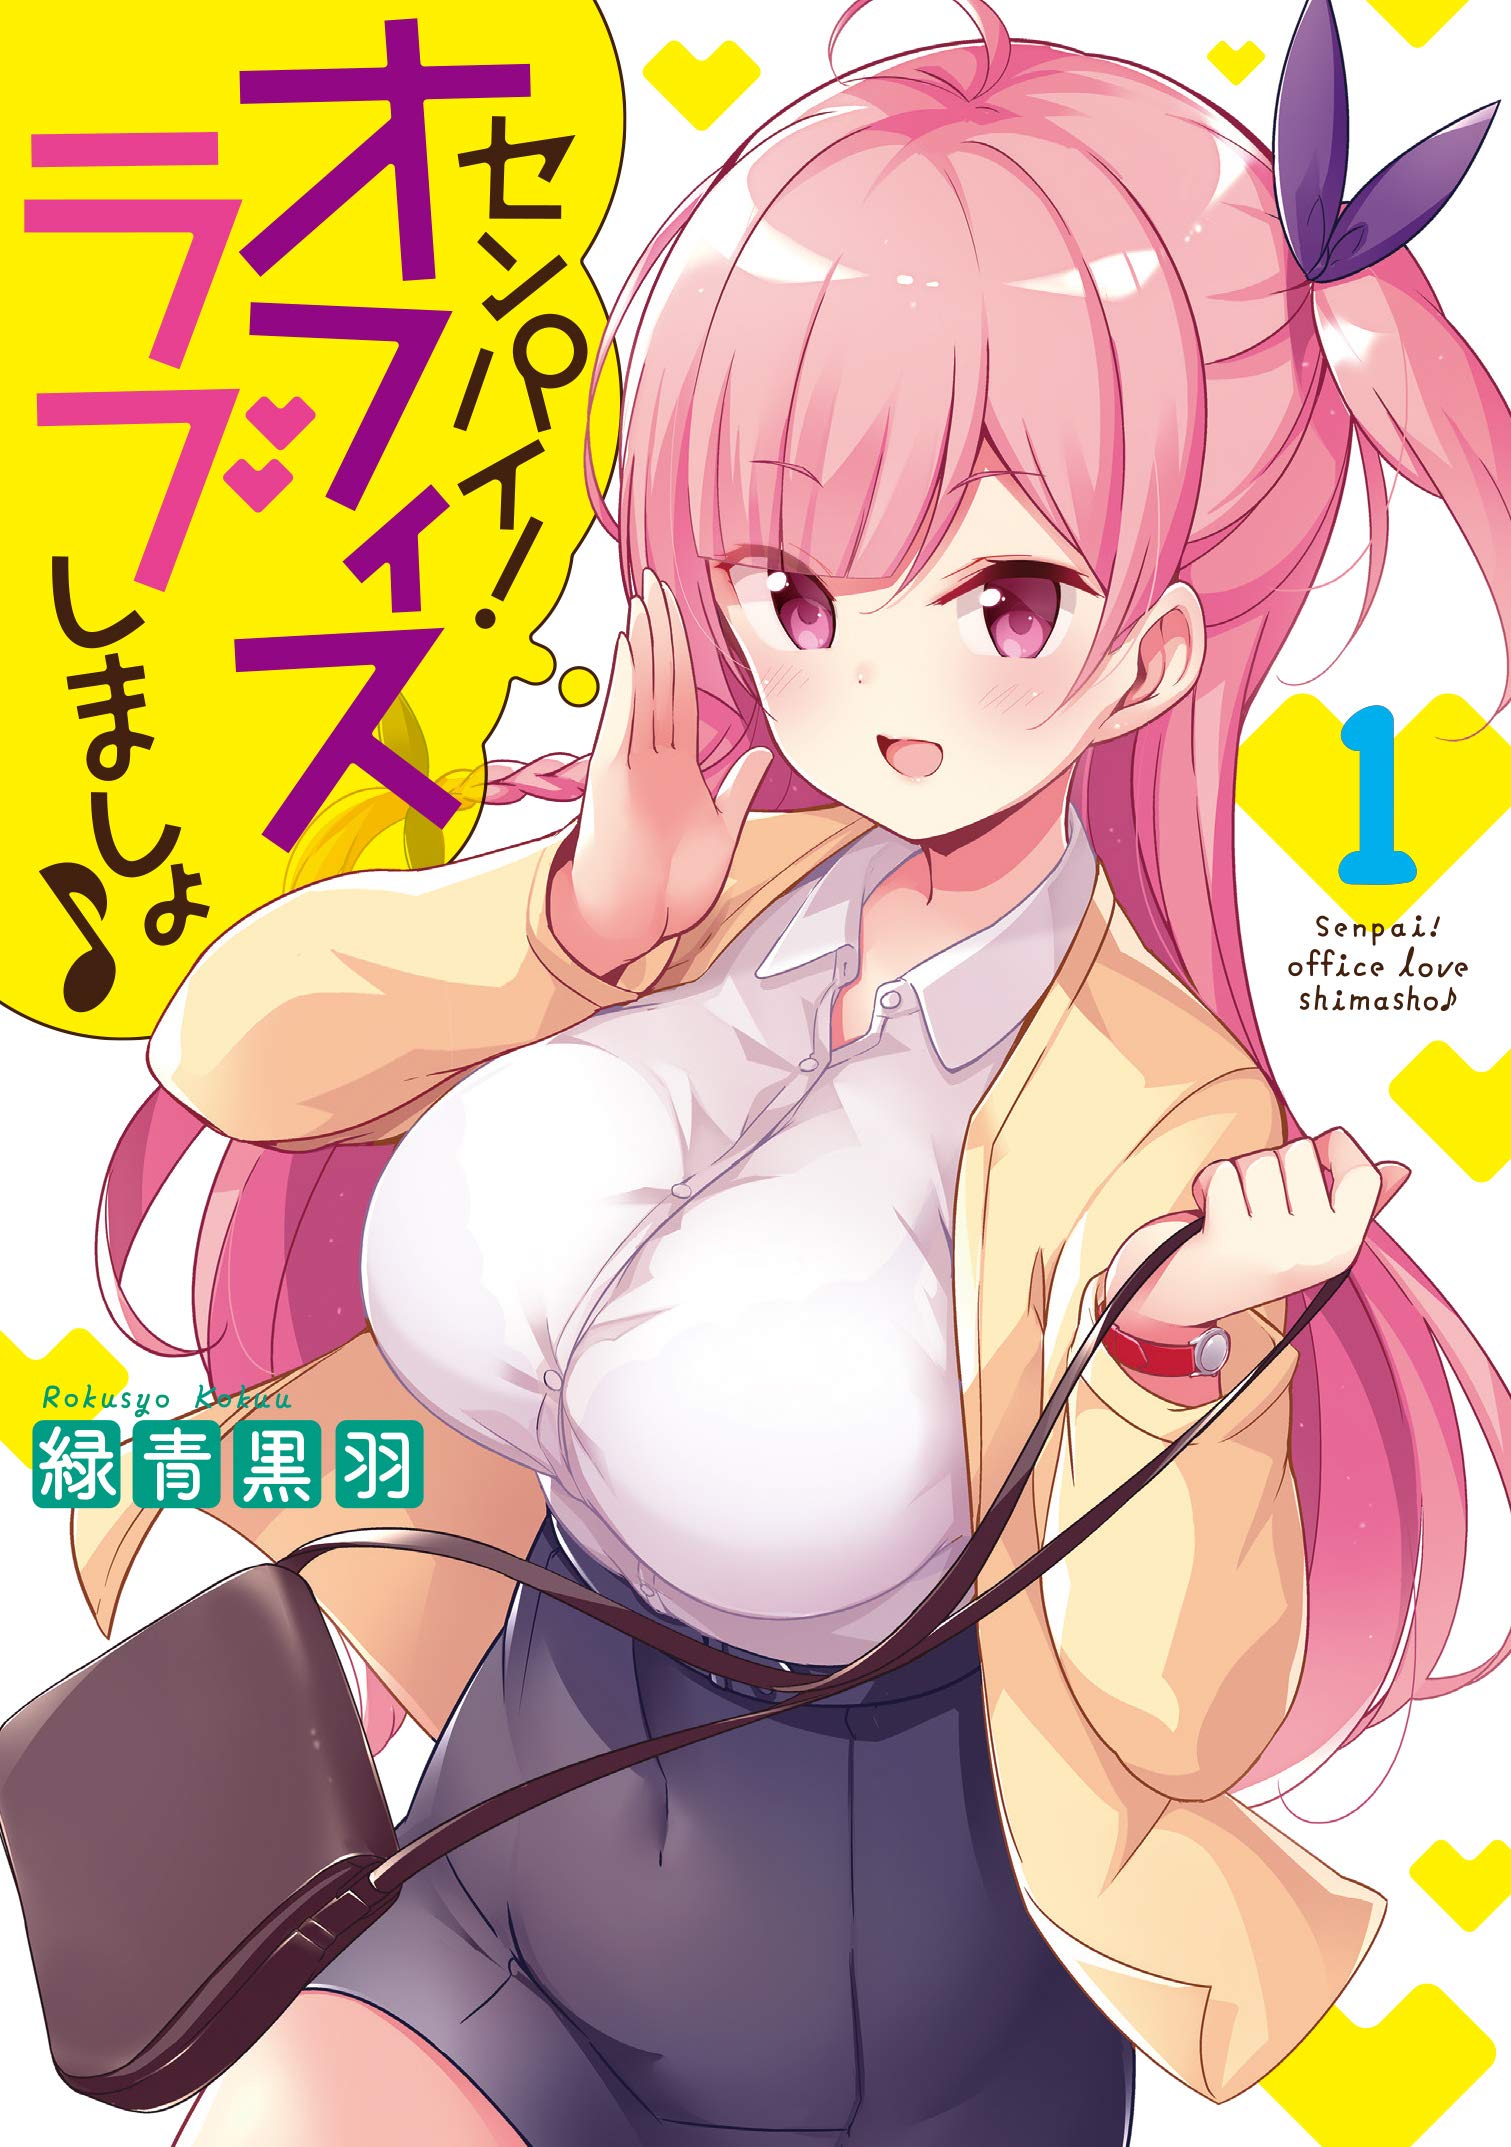 Senpai! Let's Have an Office Romance ♪ Manga